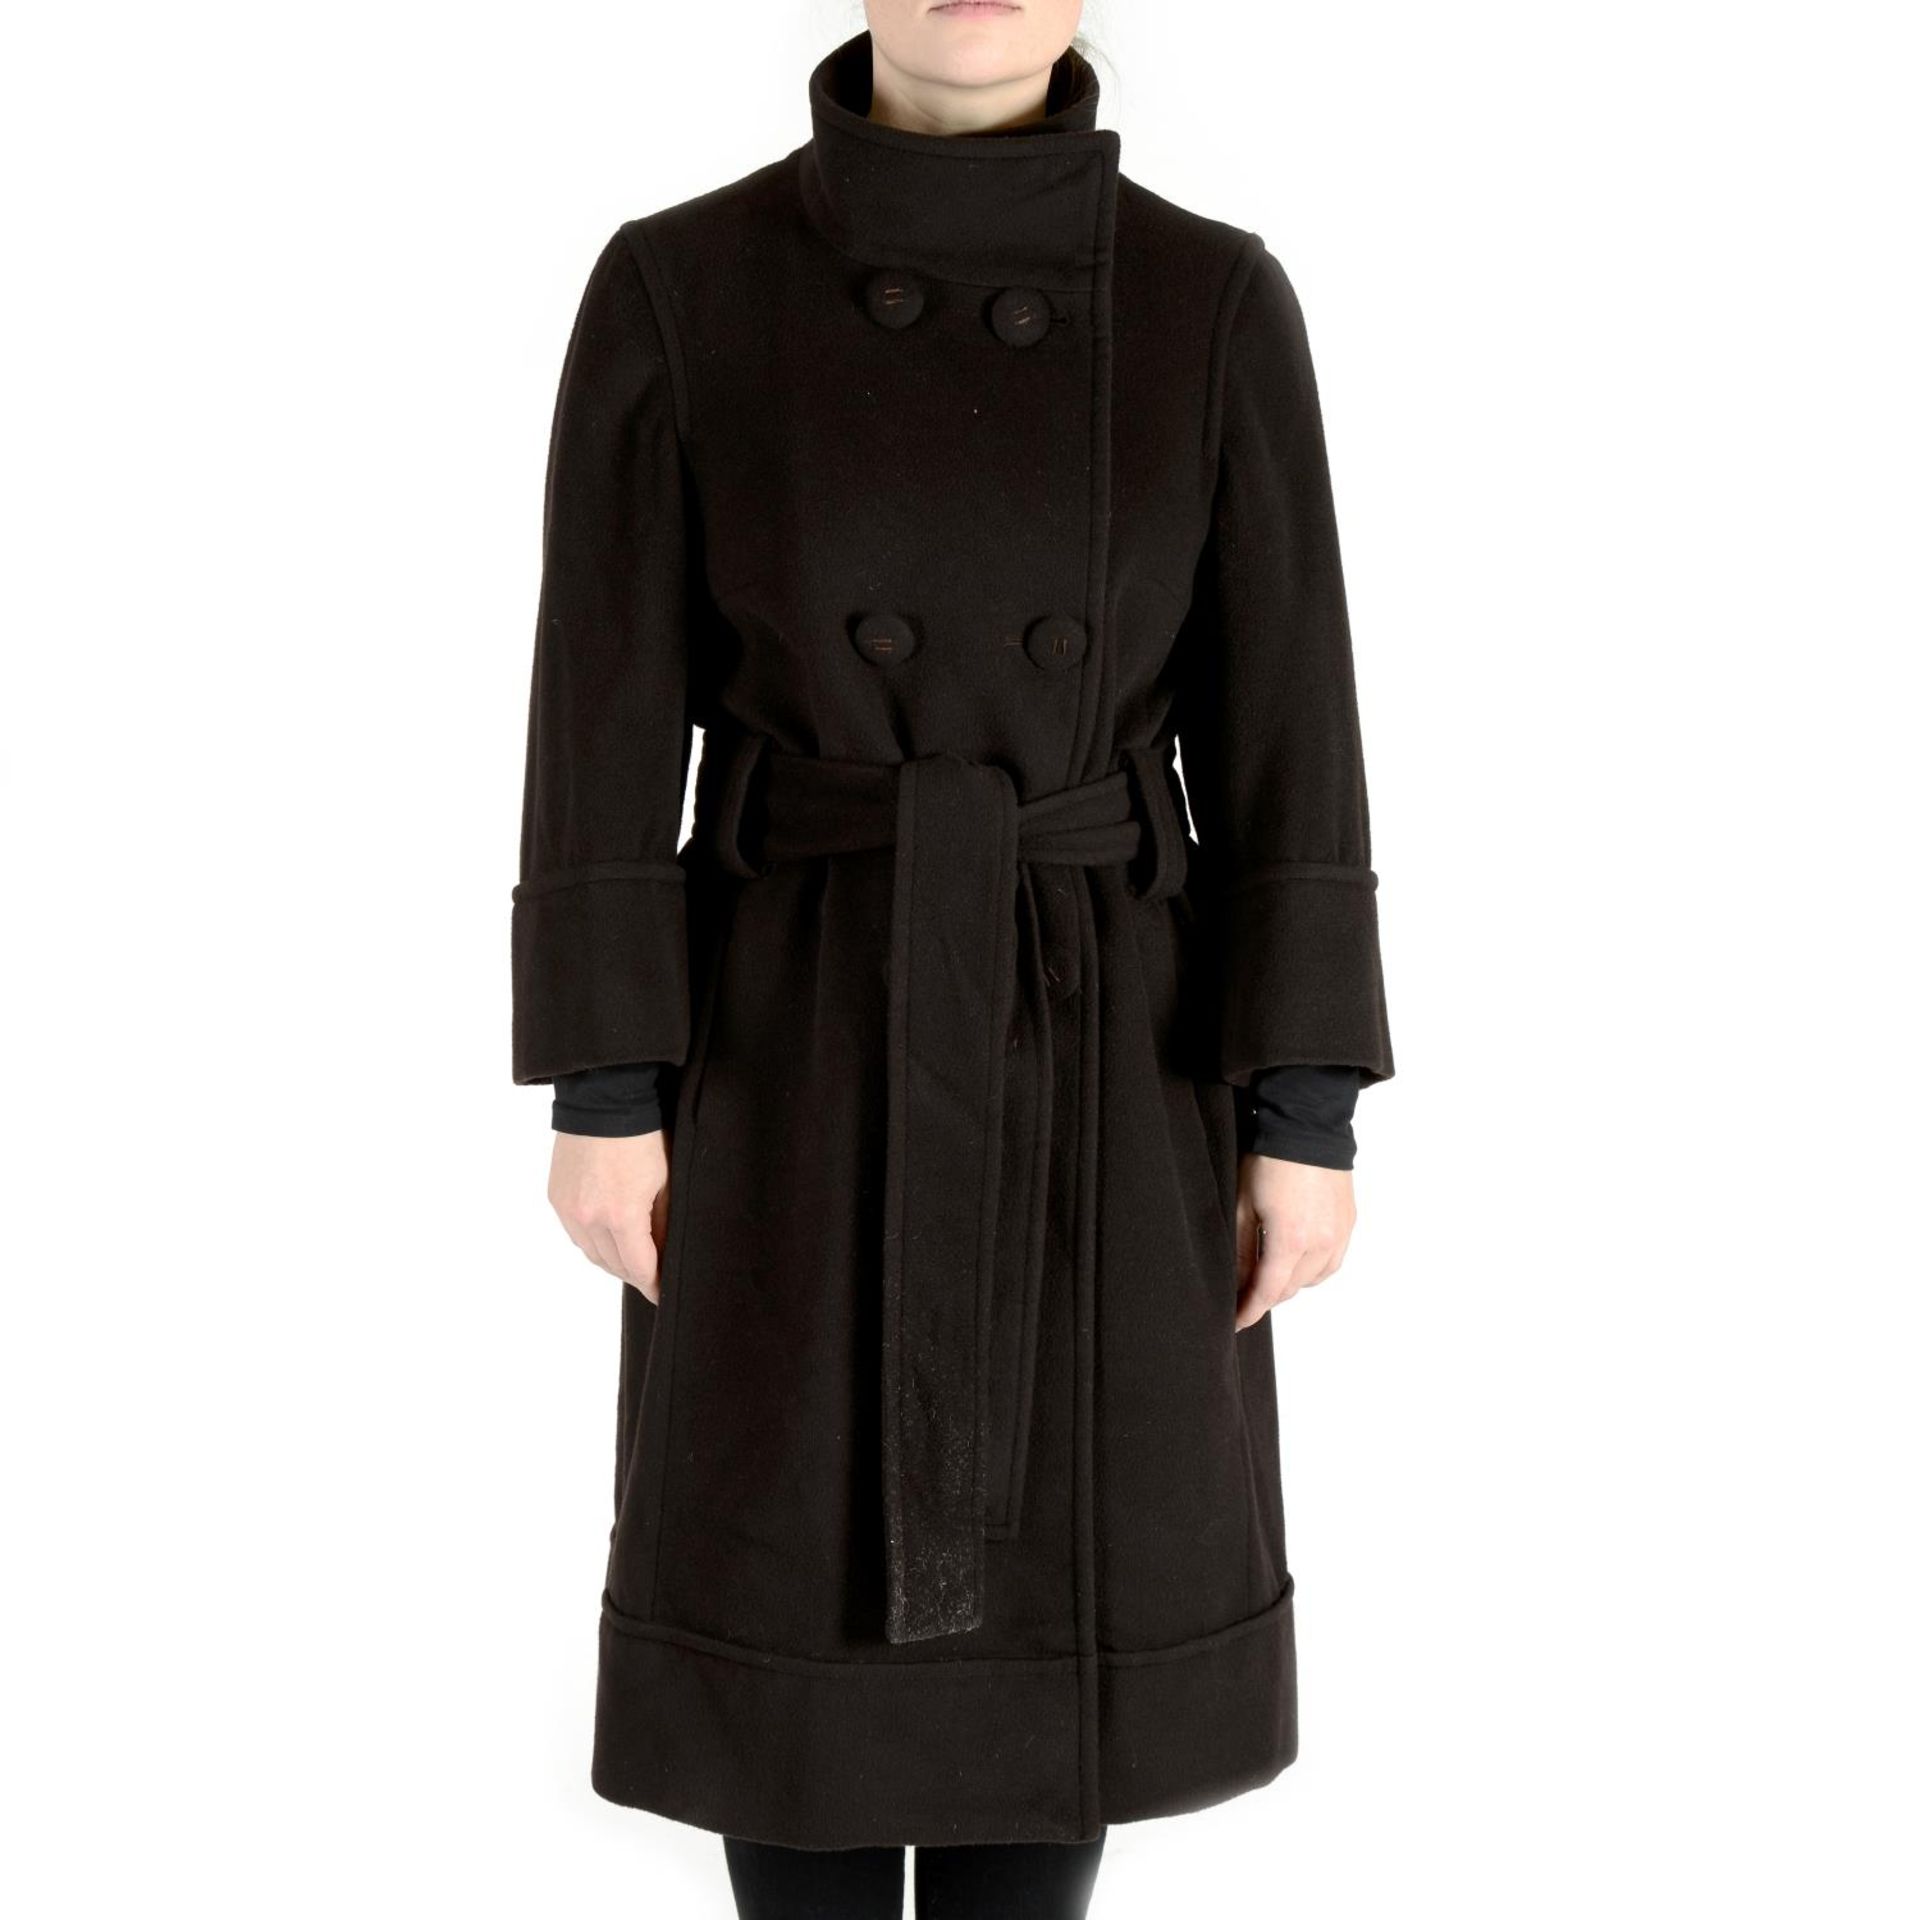 CAROLINA HERRERA - a coat and two jackets. - Image 2 of 6